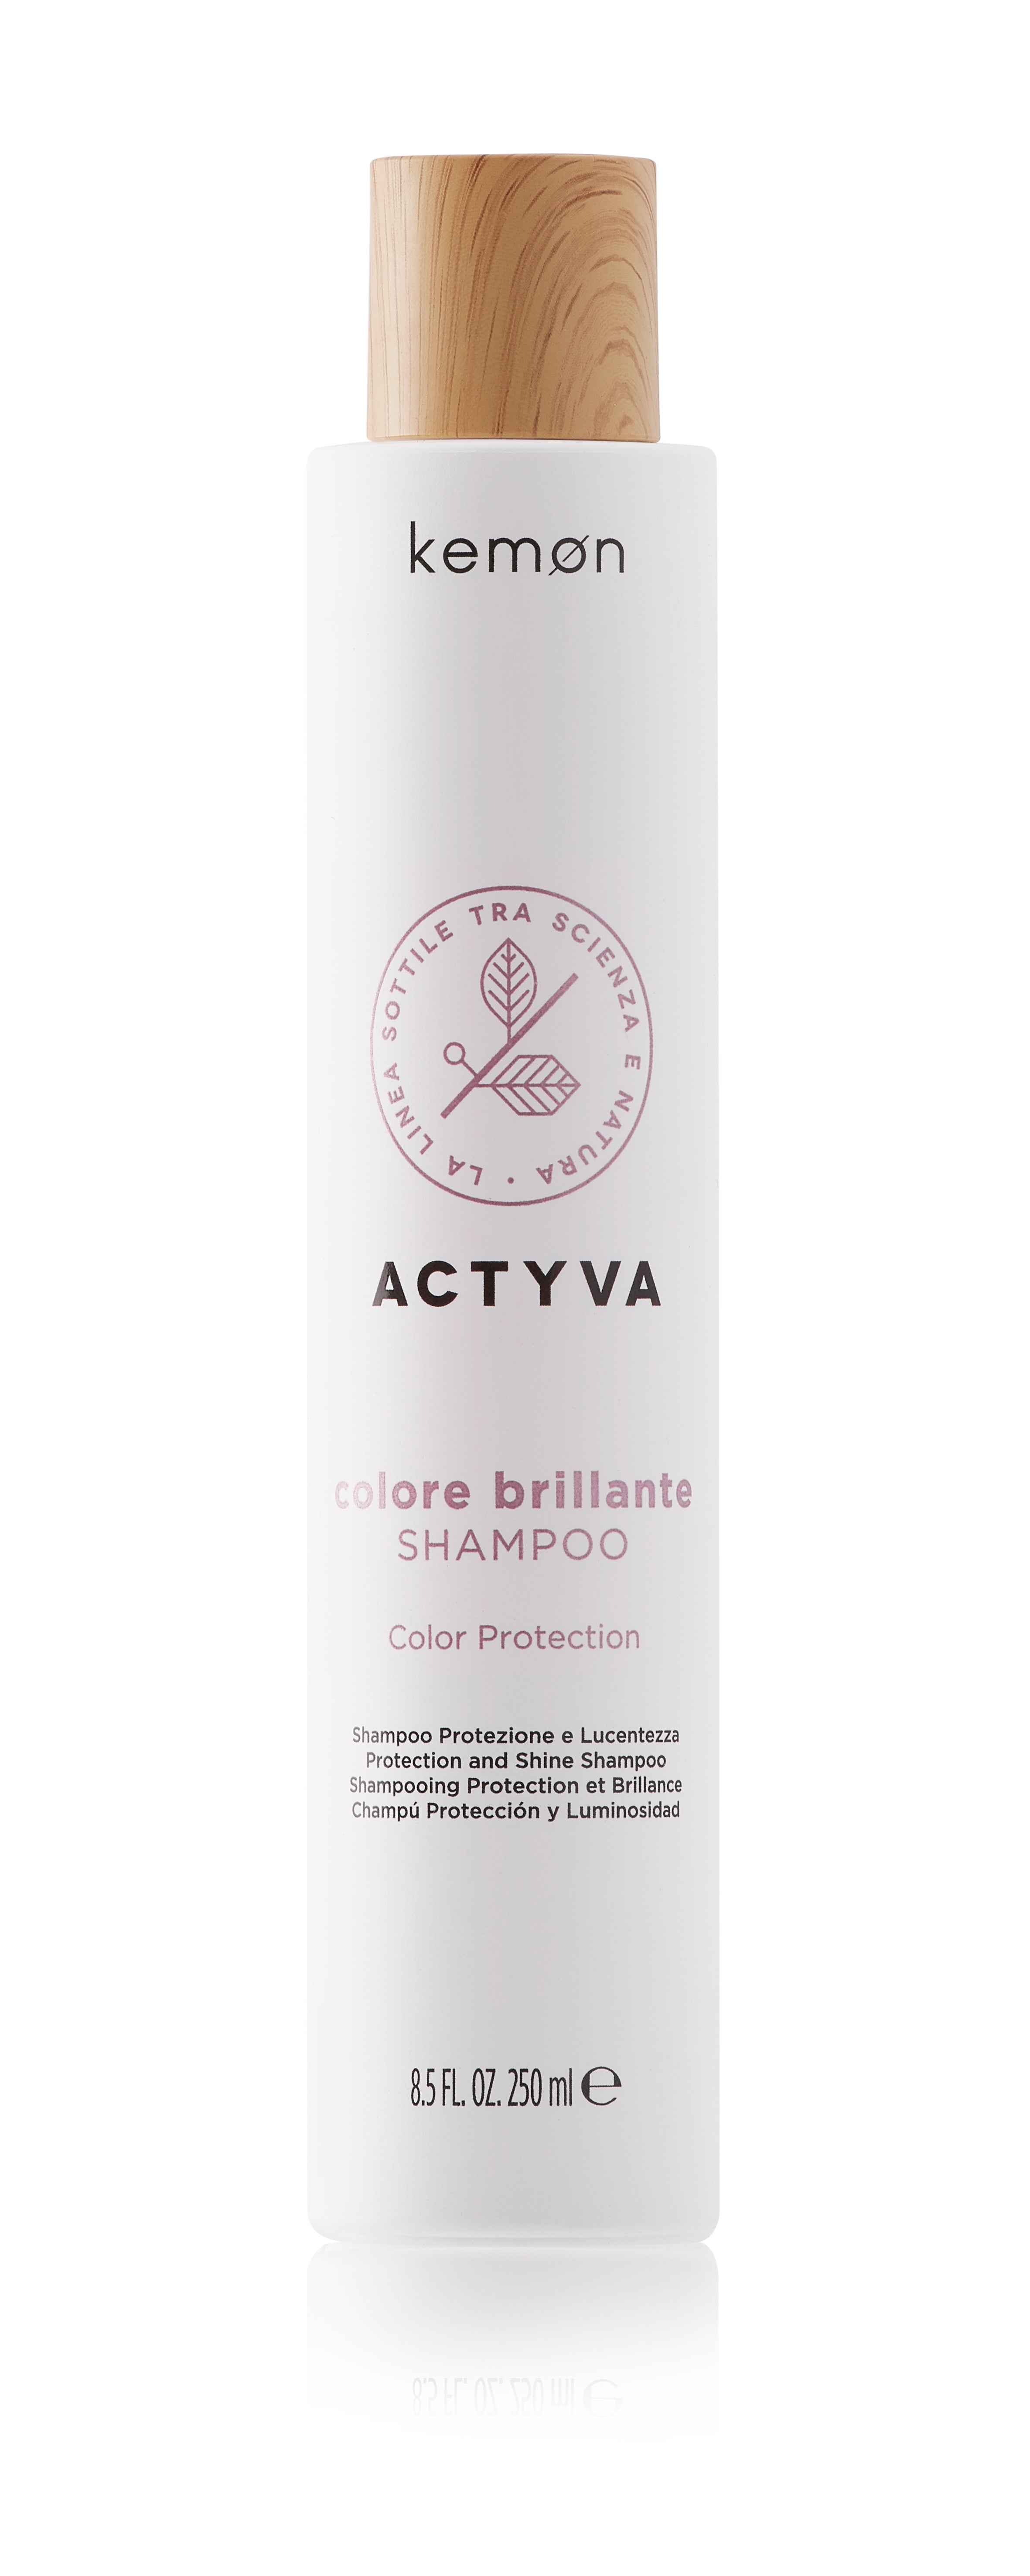 Kemon Actyva COLOR BRILLANTE Shampoo 250ml